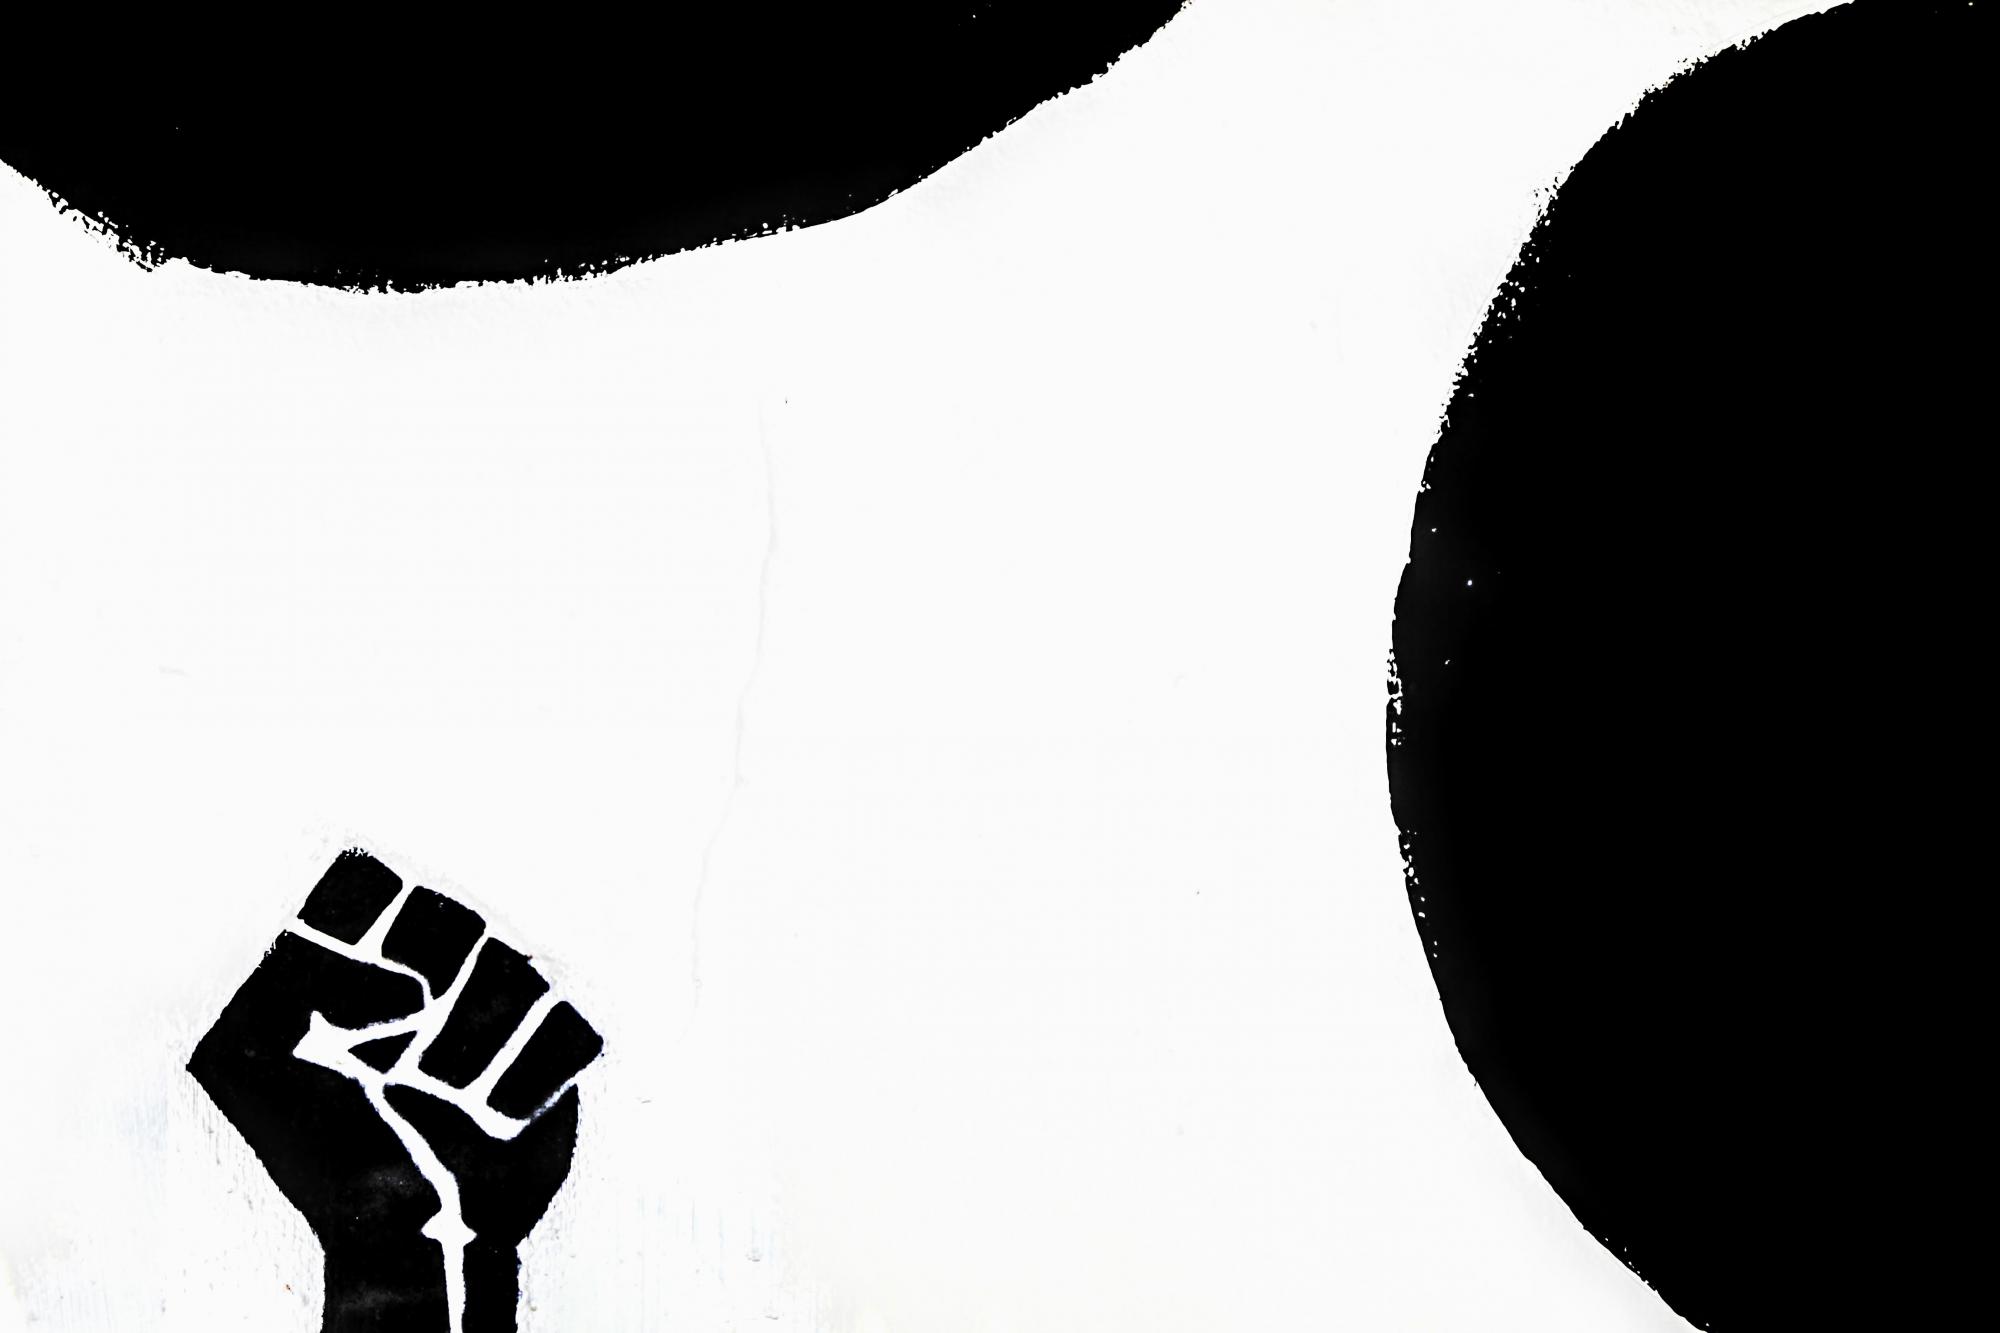 Illustration of black fist and abstract circular shapes.